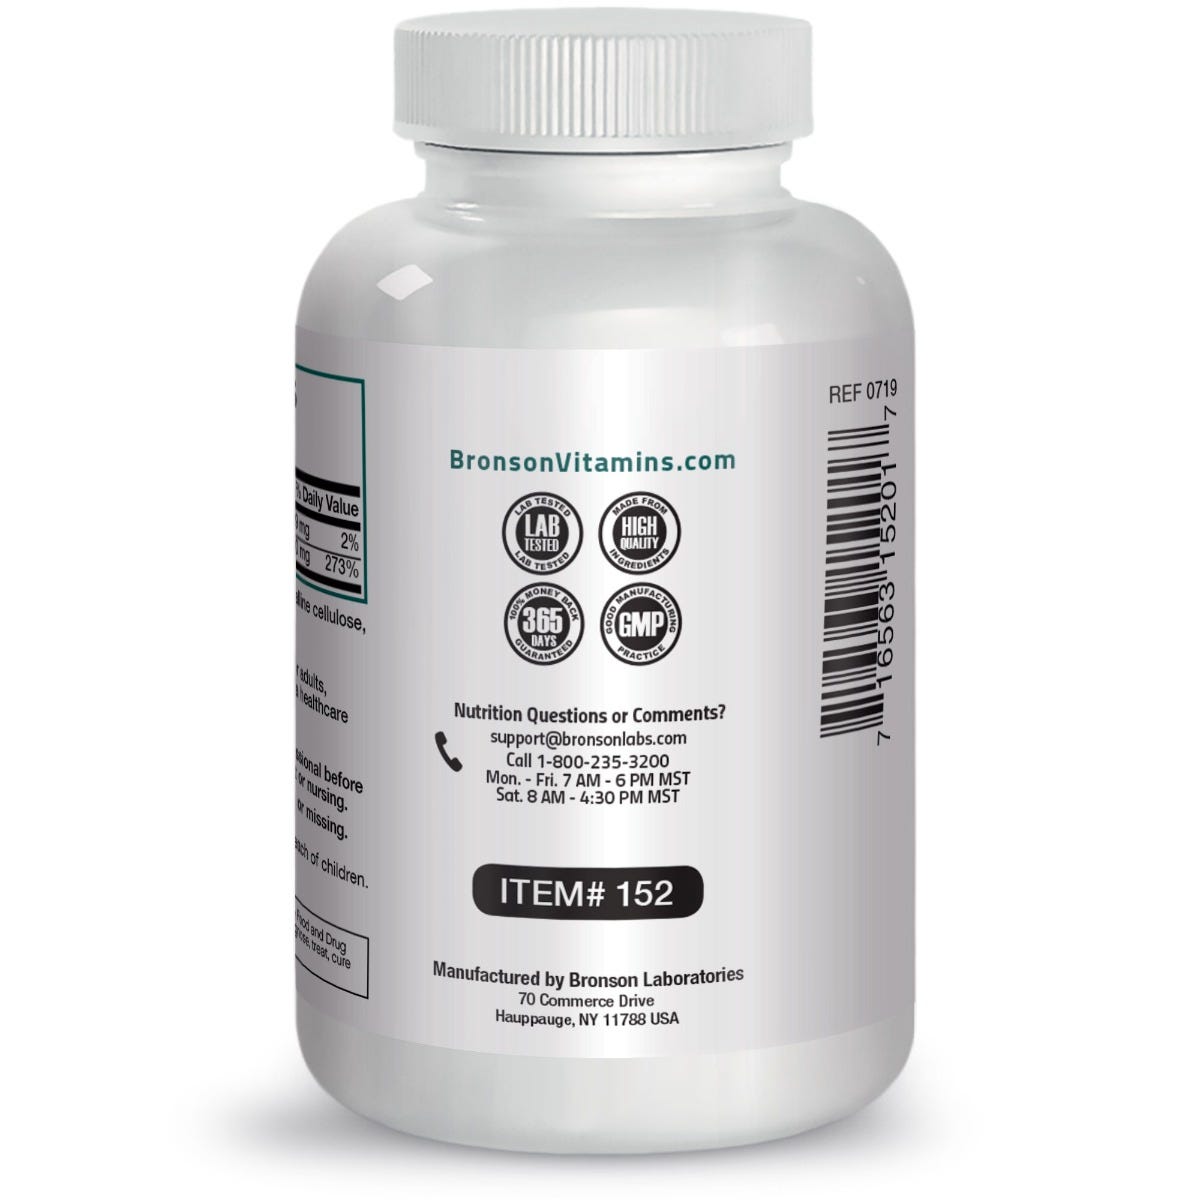 Bronson Vitamins Zinc Picolinate - 30 mg - 100 Capsules, Item #152, Bottle, Side Label, Contact Info